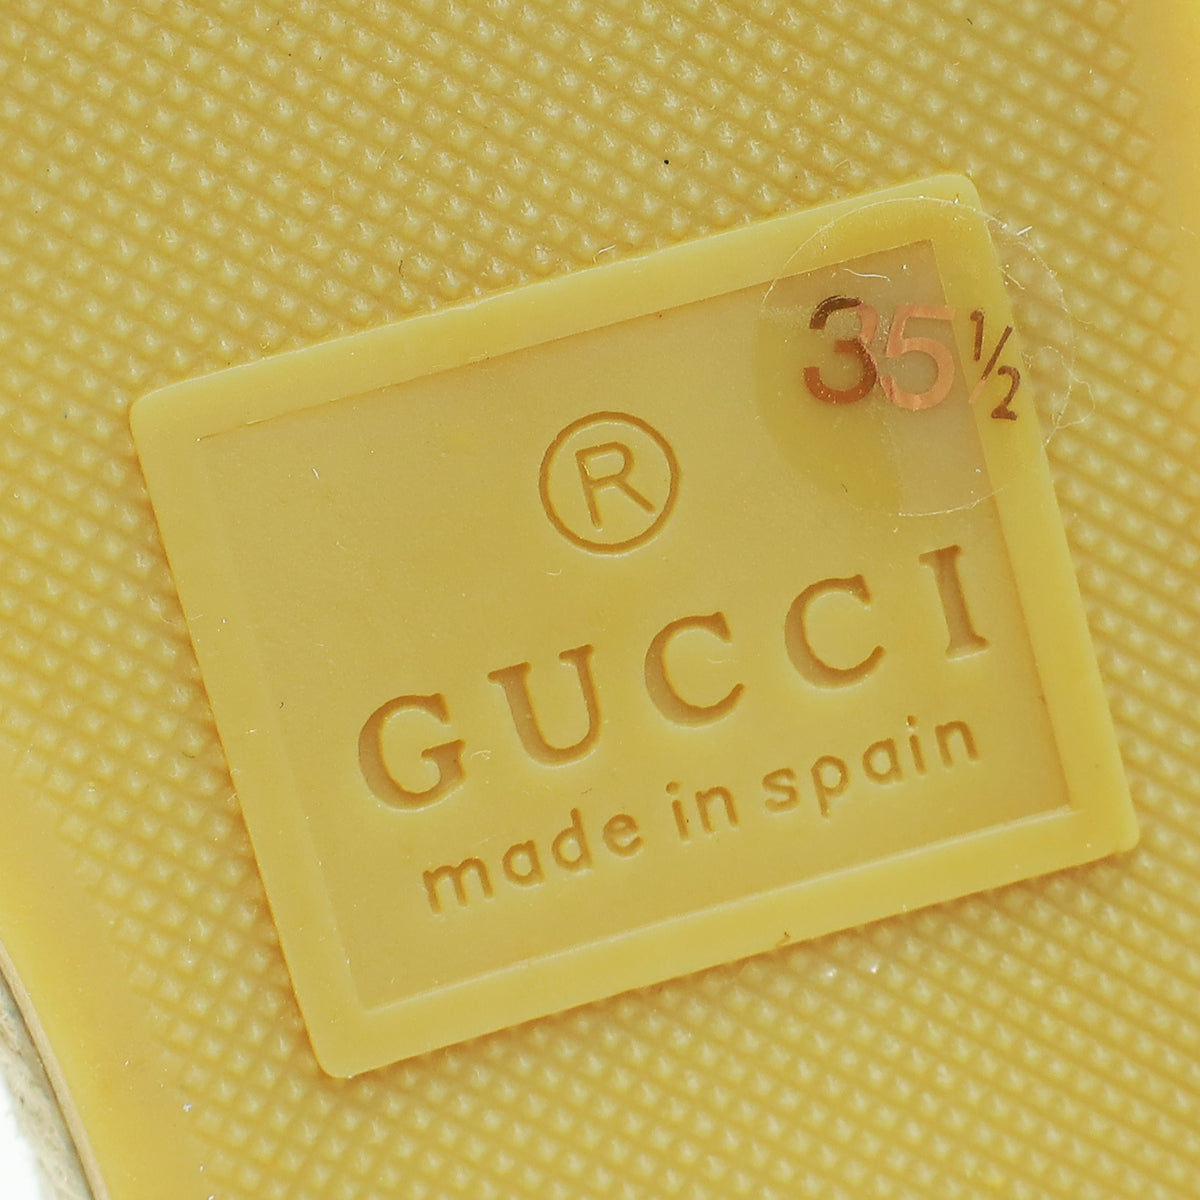 Gucci White GG Marmont Espadrille Slide Sandals 35.5